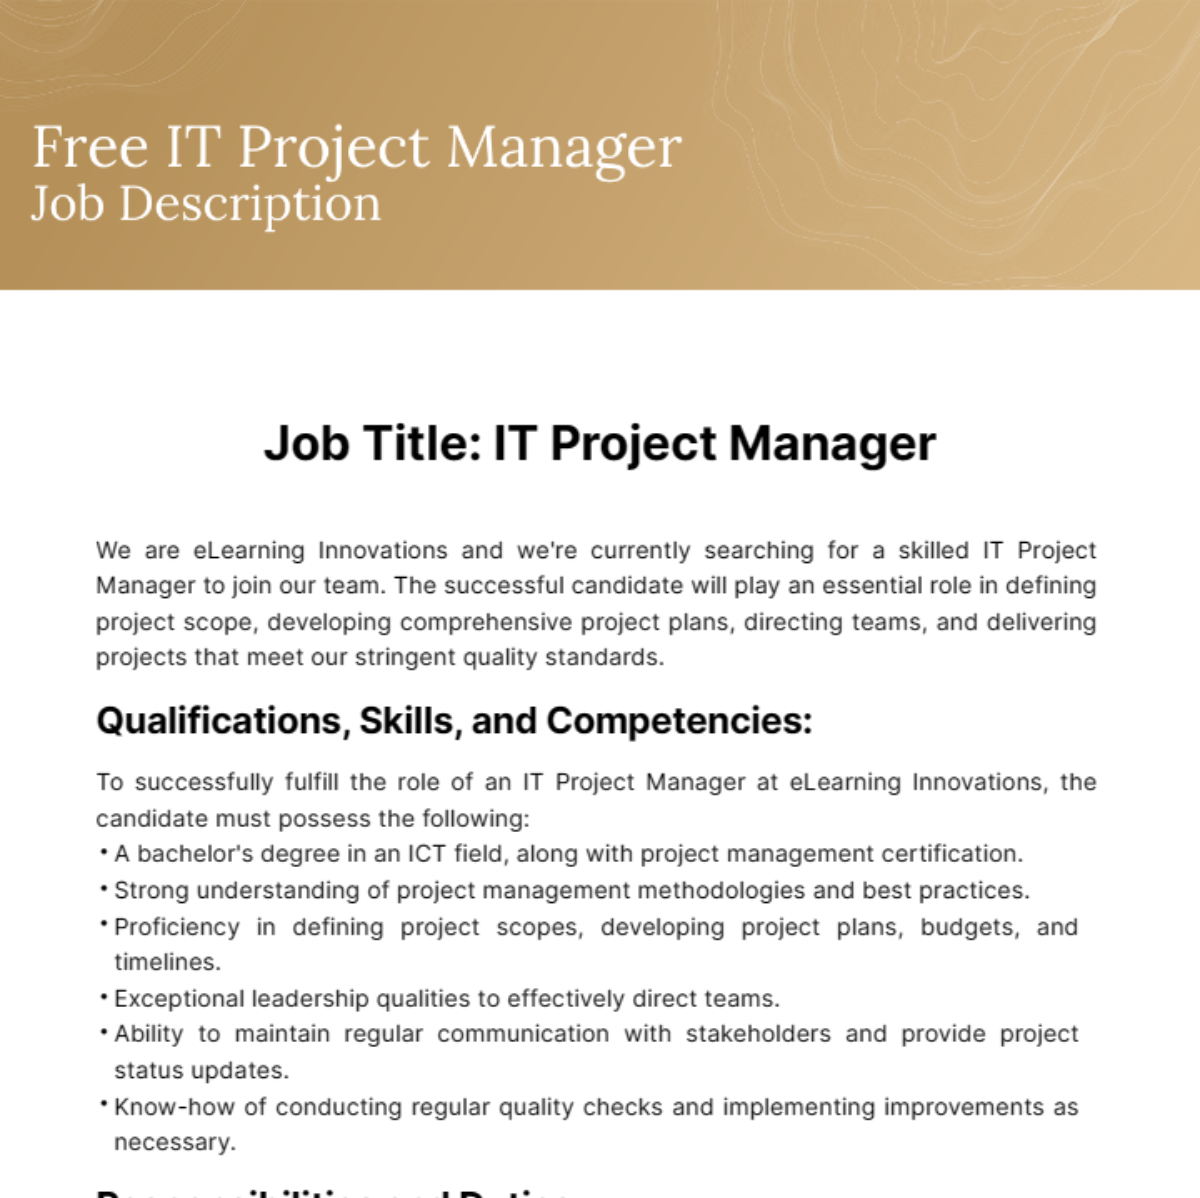 Free IT Project Manager Job Description Template